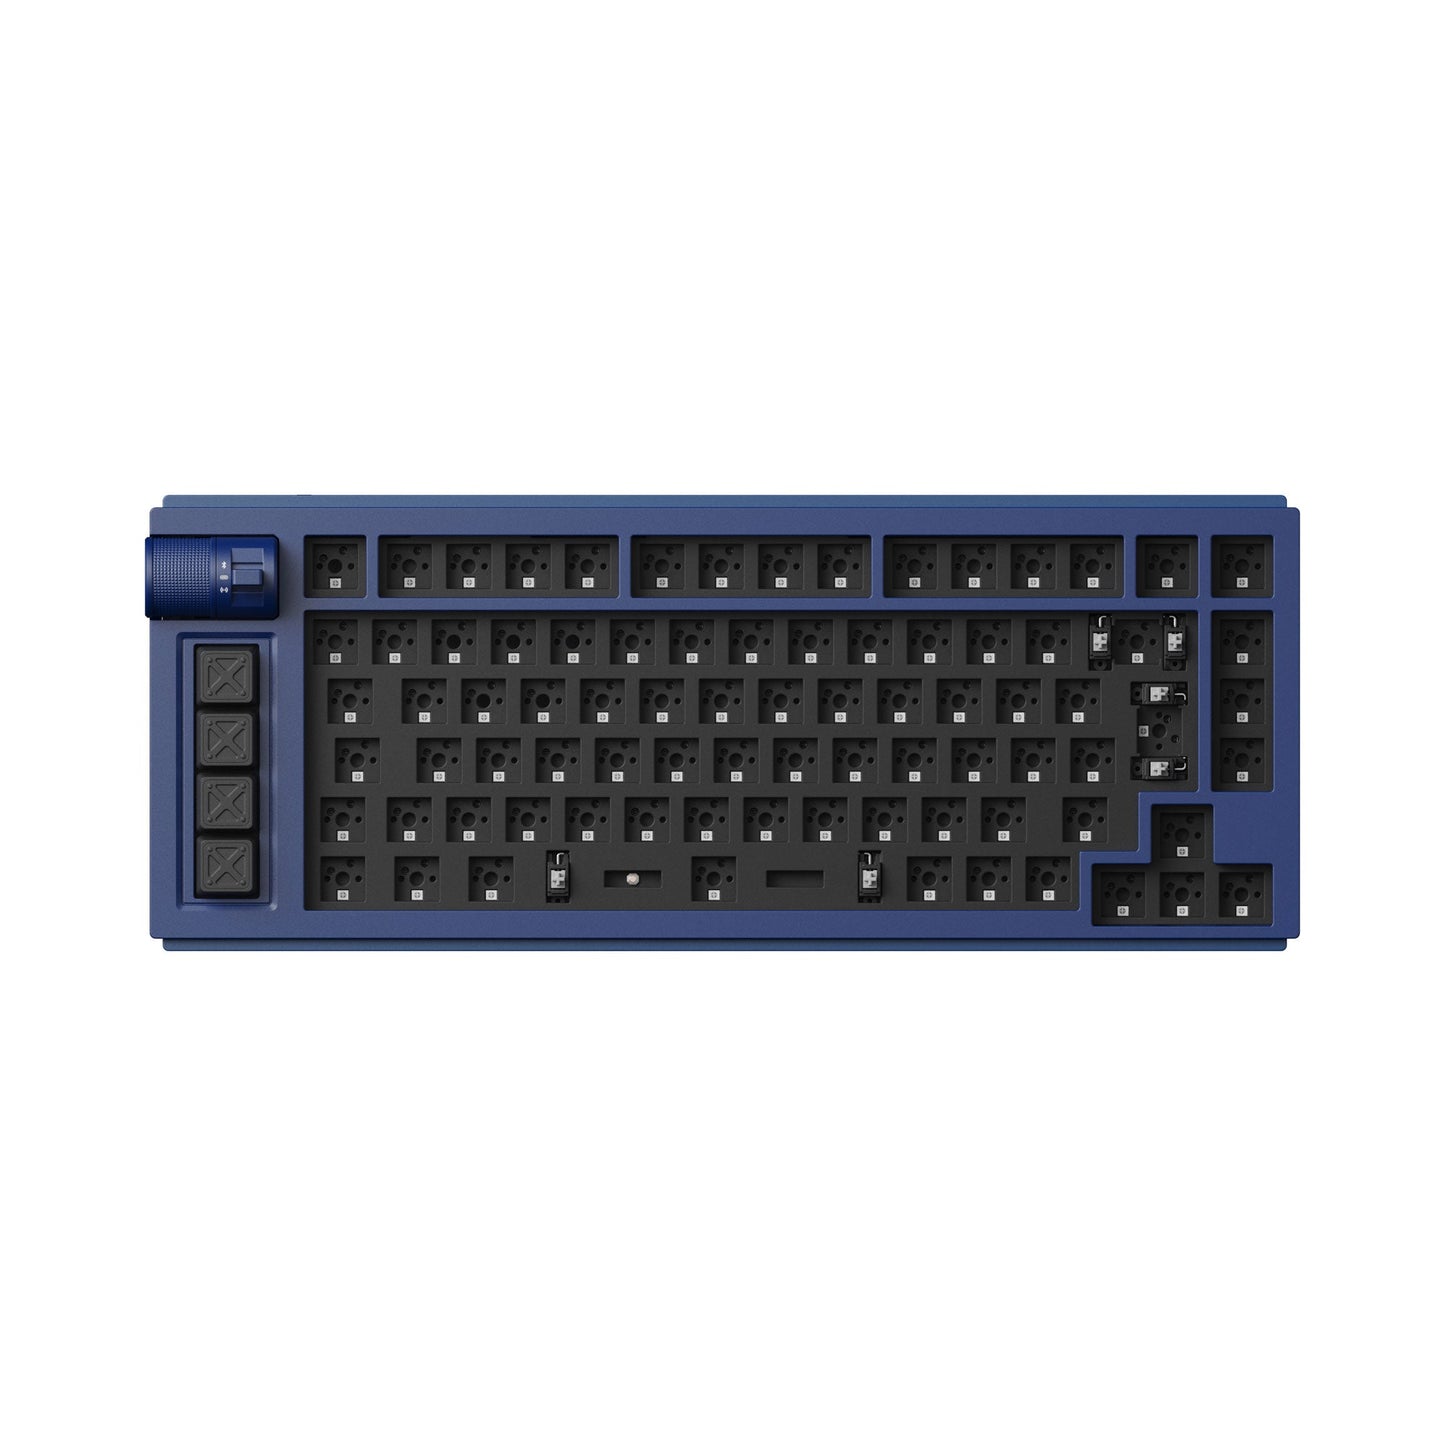 Lemokey L1 QMK VIA Wireless Custom Gaming Keyboard 75% Layout Aluminum Navy Blue Barebone ISO for Windows Mac Linux